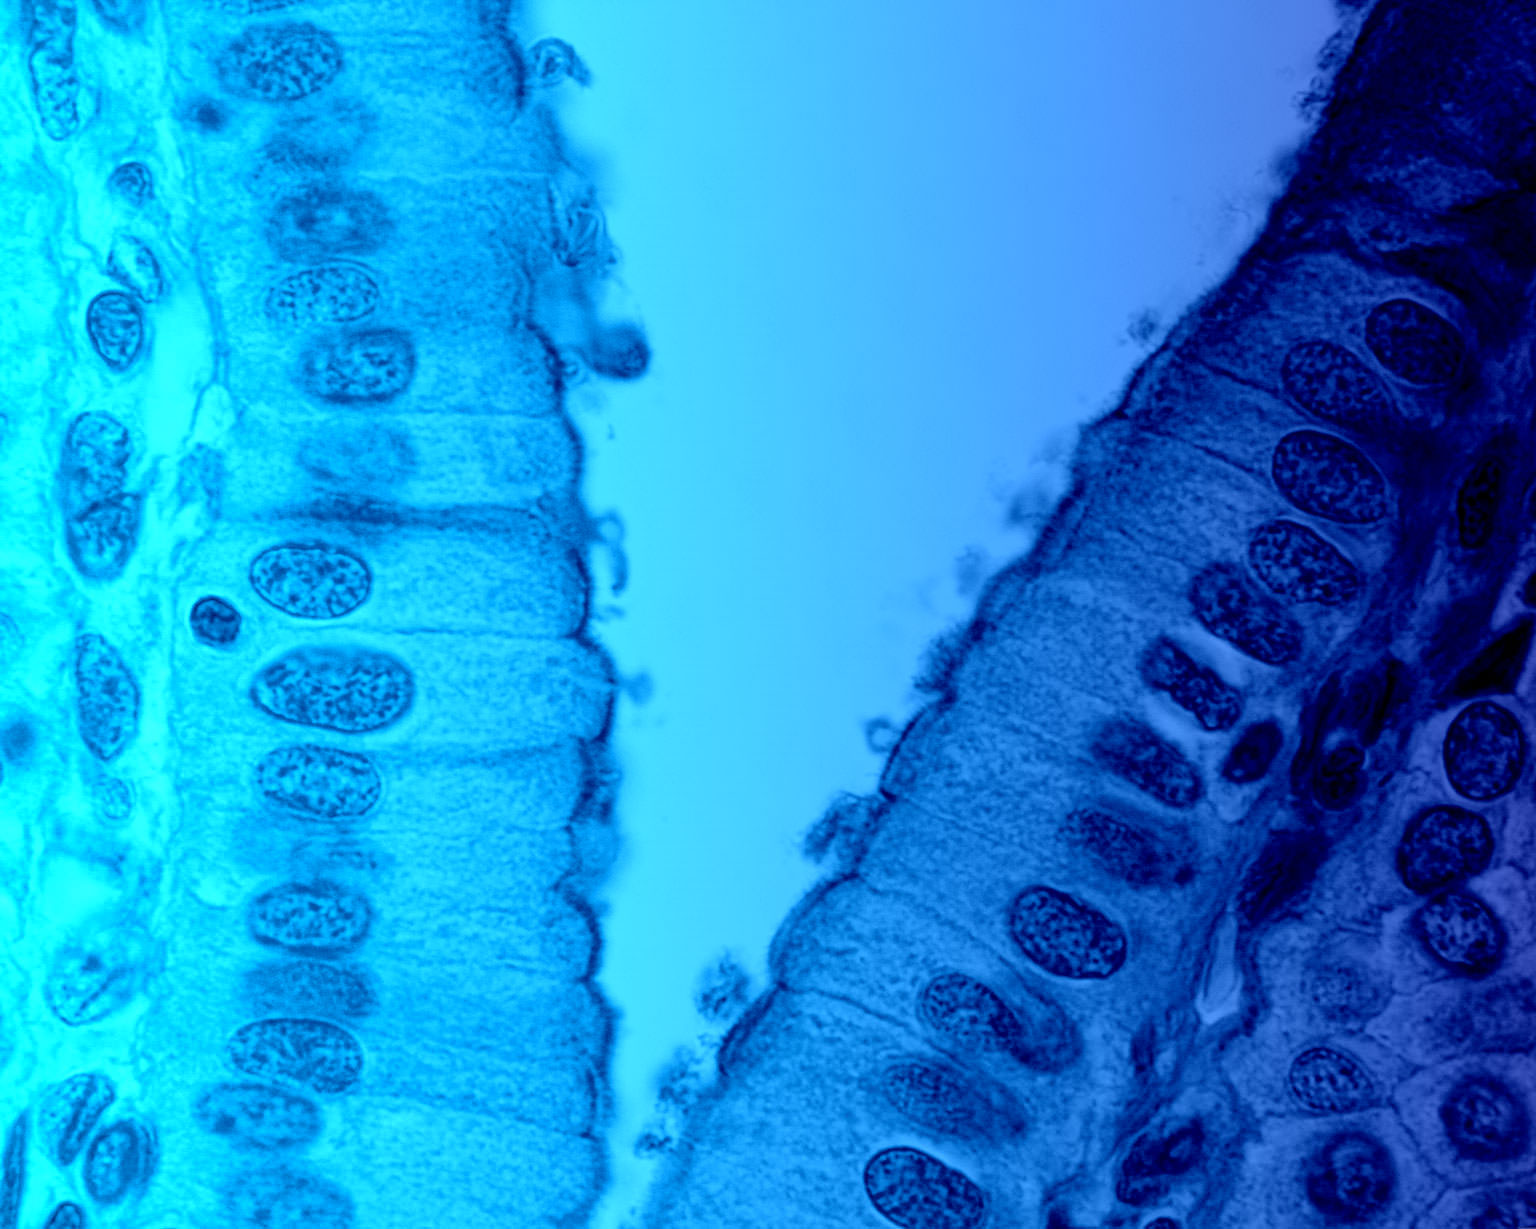 pelobiotech-gmbh-microscopic-photograph-of-cells-jose-luis-calvo.jpg